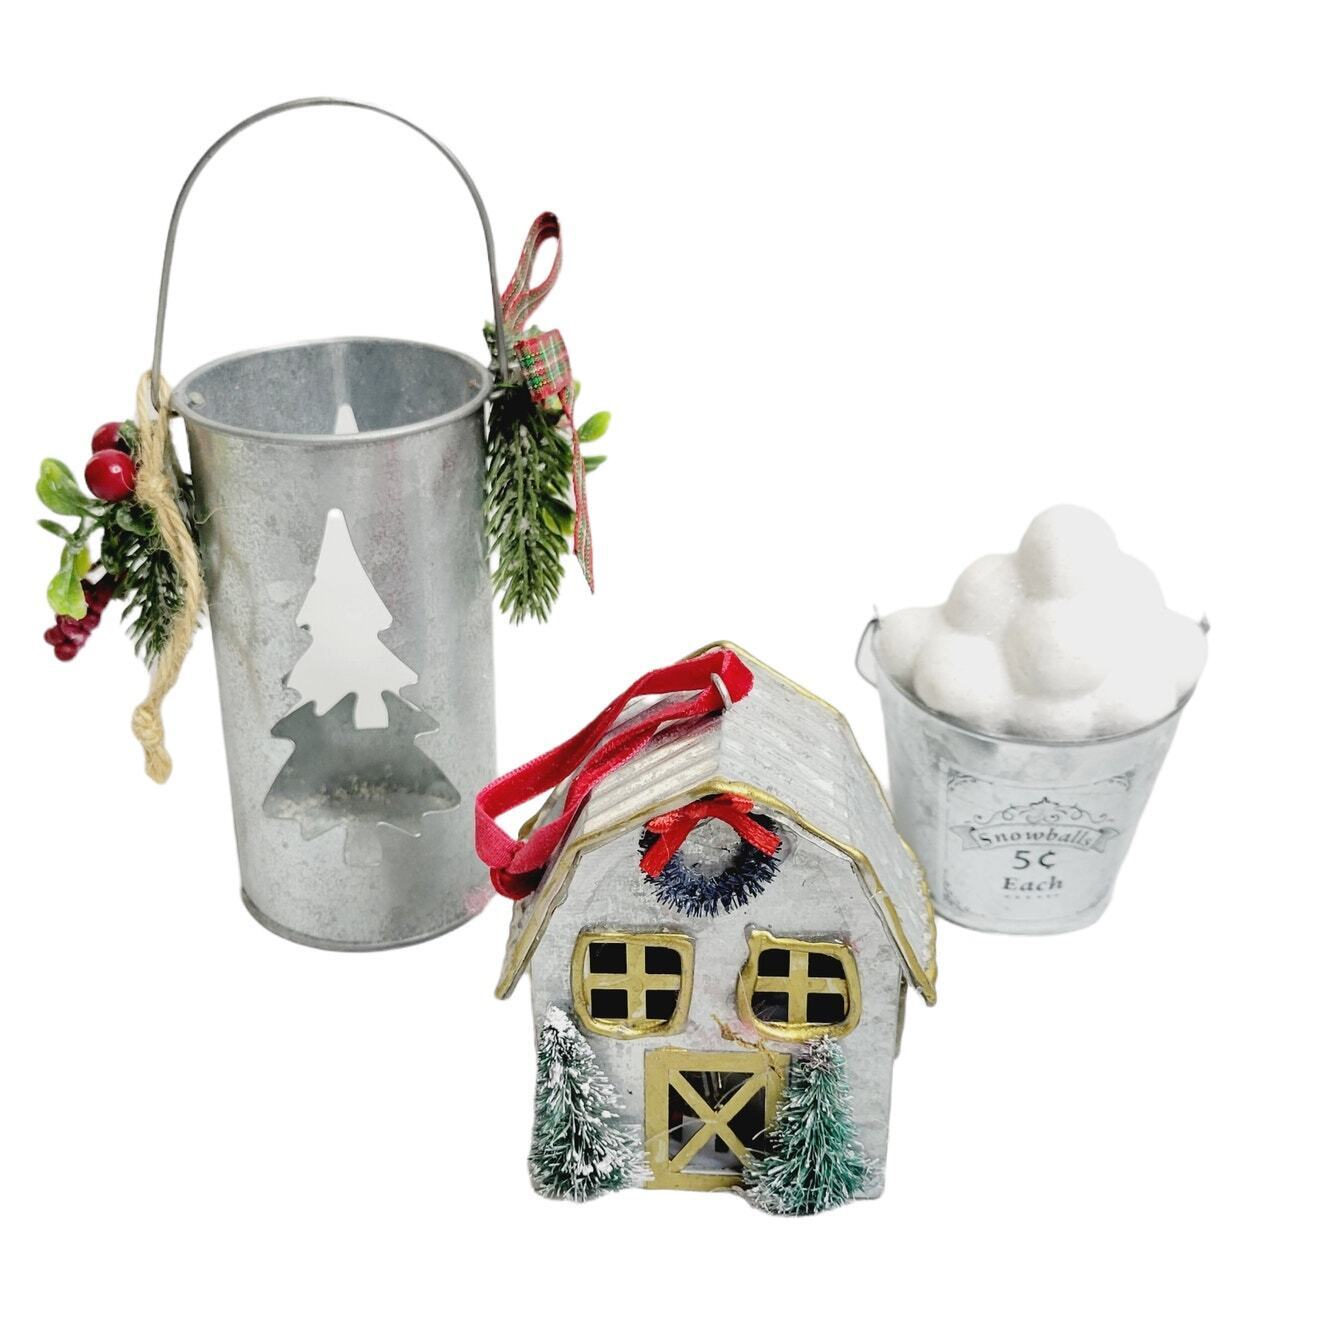 Metal Bucket Christmas Ornaments 3 Piece Mixed Decor Lot Snowballs Lighted House